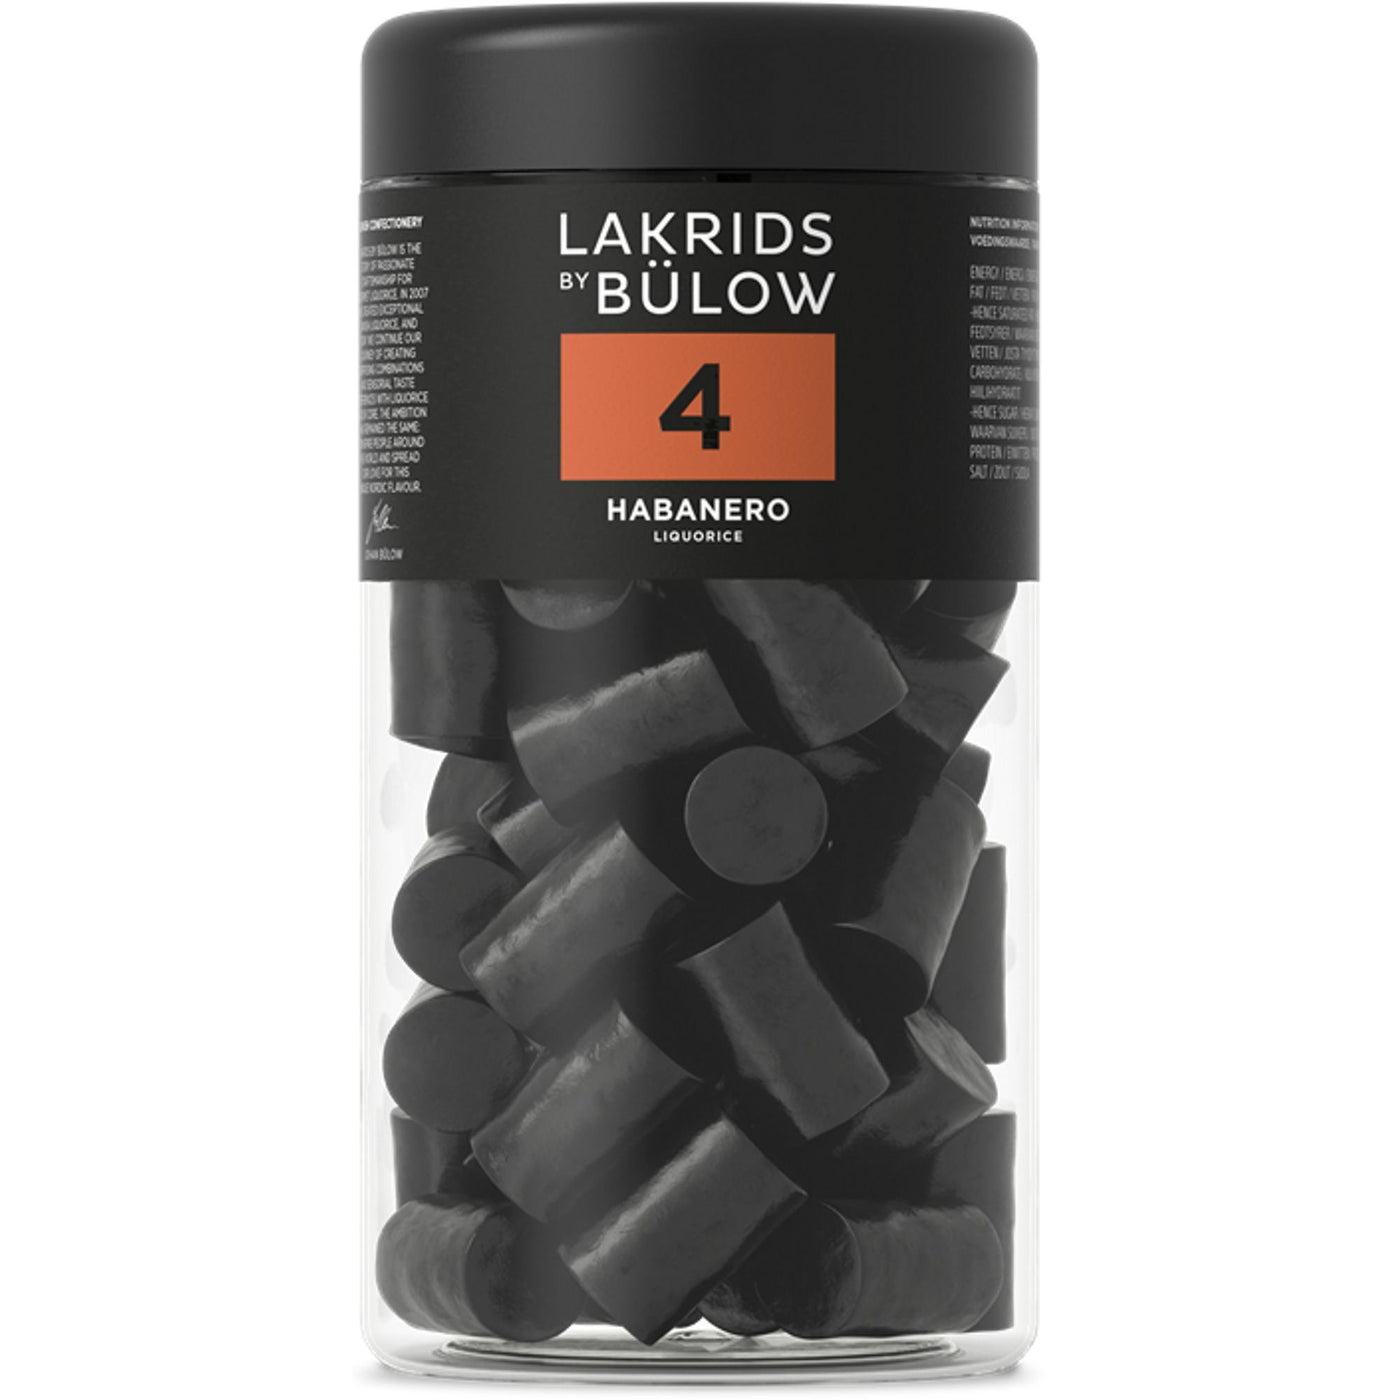 Lakrids Liquorice 4 - Habanero Chili Liquorice-Lakrids by Bülow-360g-Lakrids by Bülow